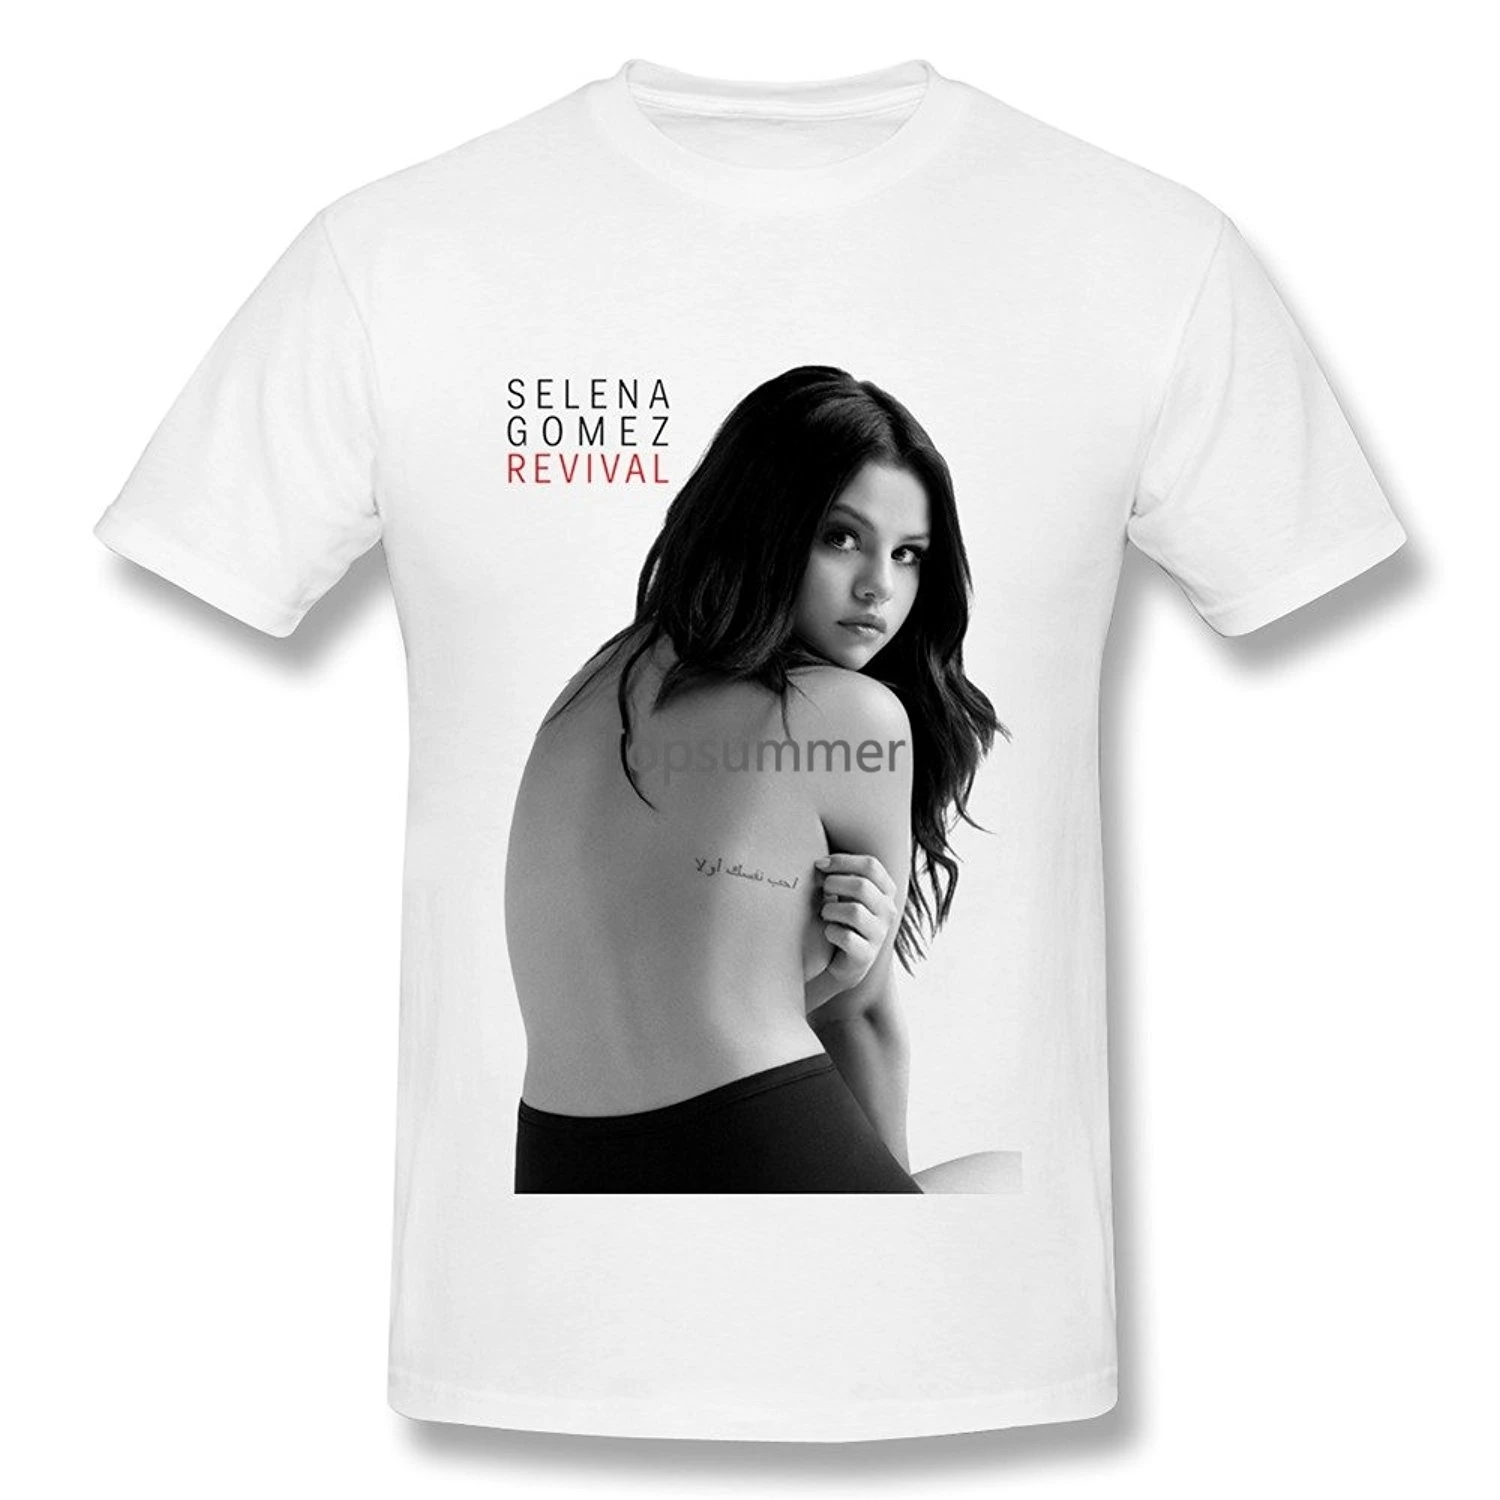 

Men T Shirt Rock Singer Selena Gomez Revival Tour Poster Fashion T Shirt Funny T-Shirt Novelty Tshirt Women